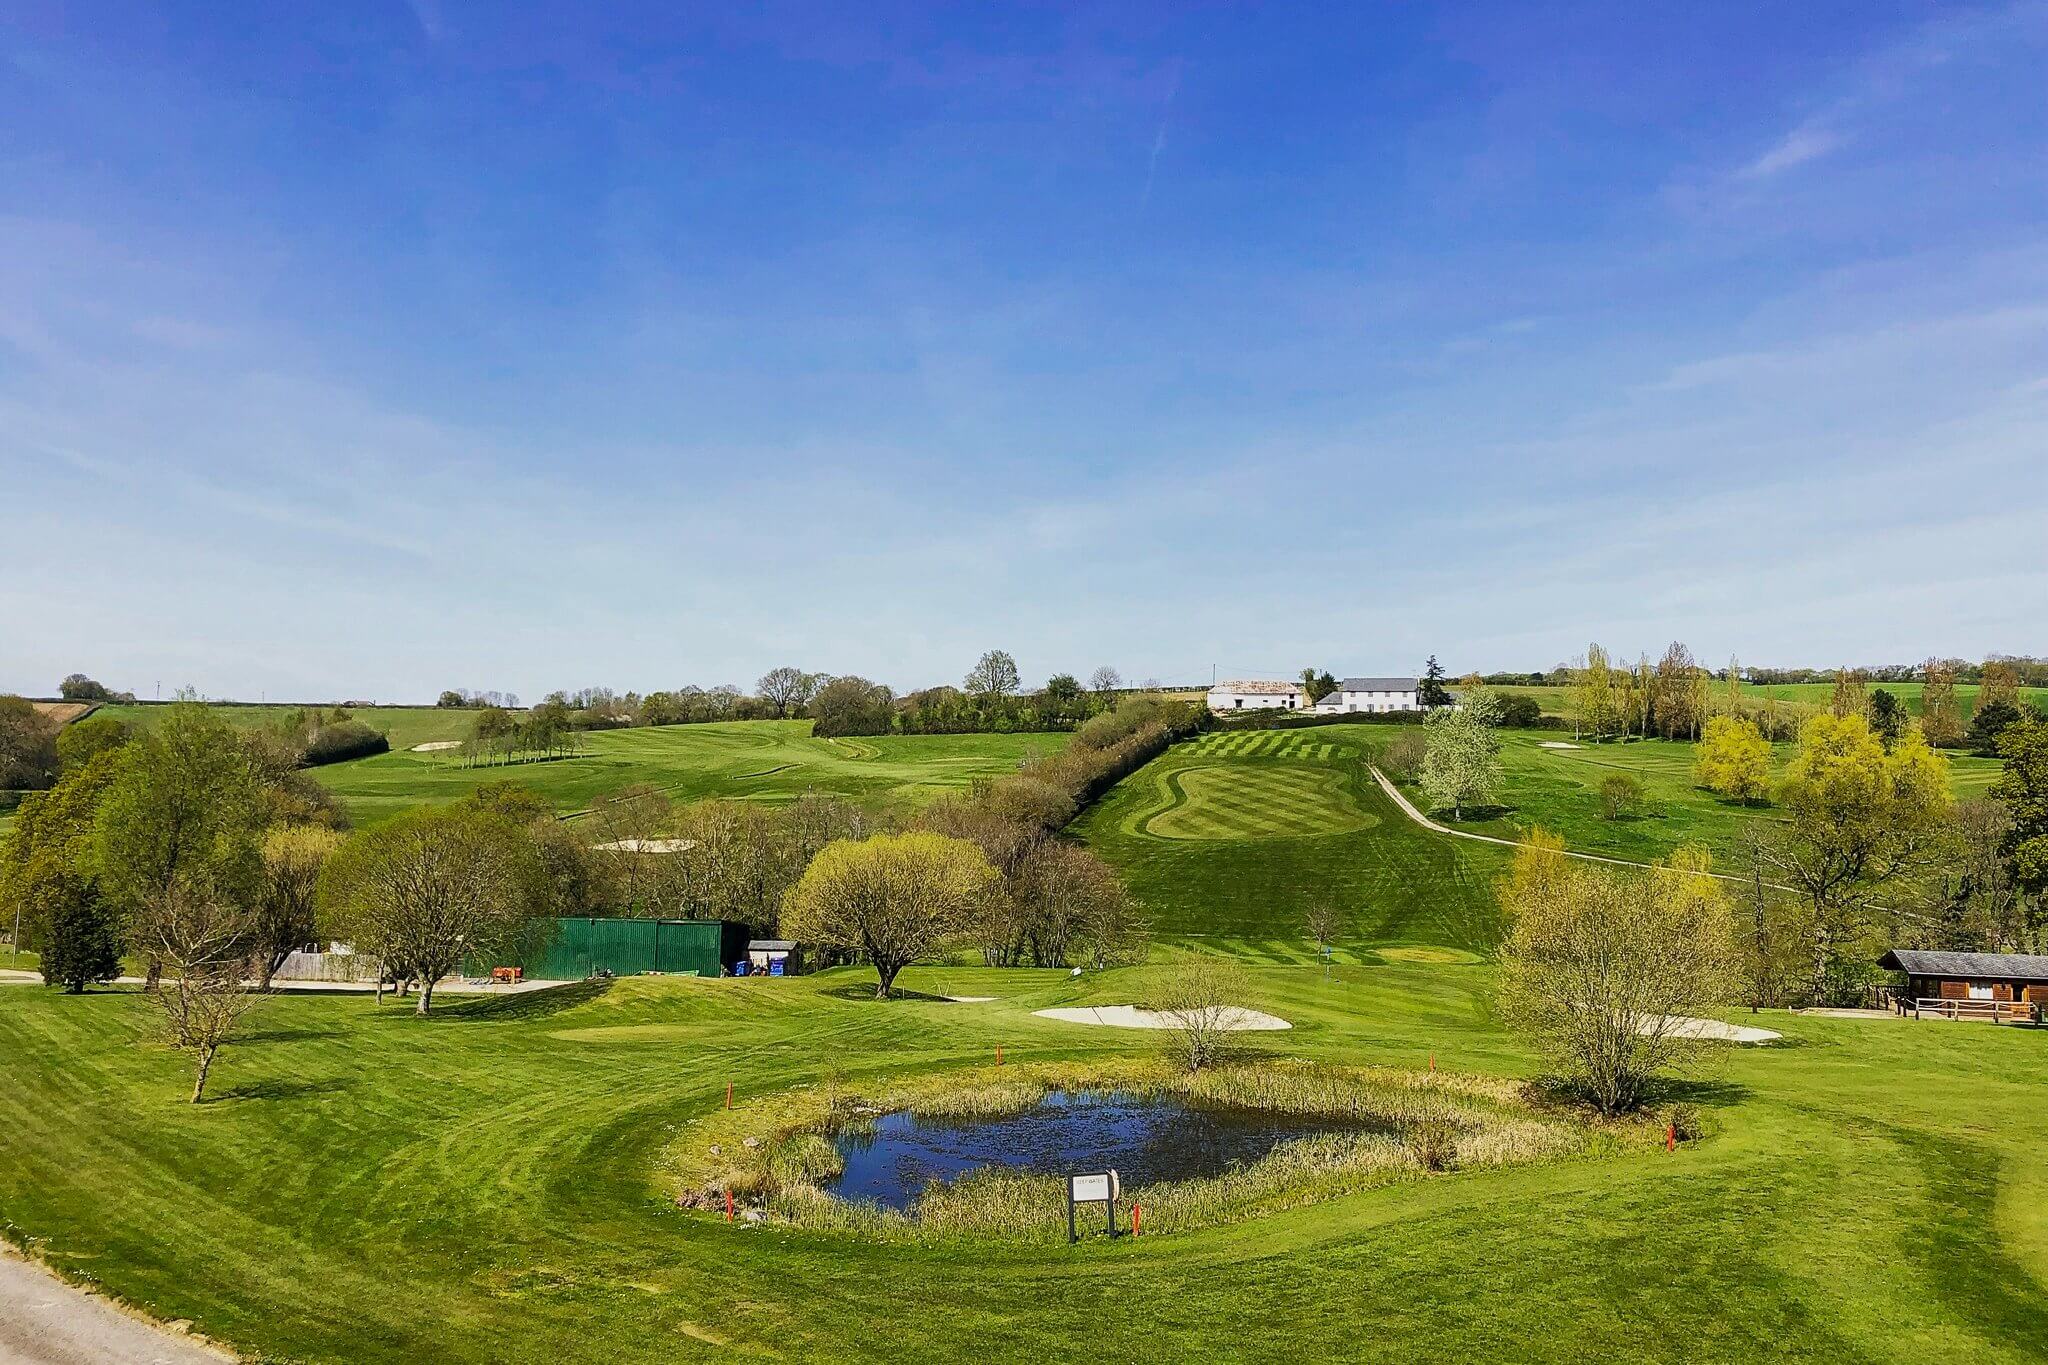 Fingle Glen Golf Course